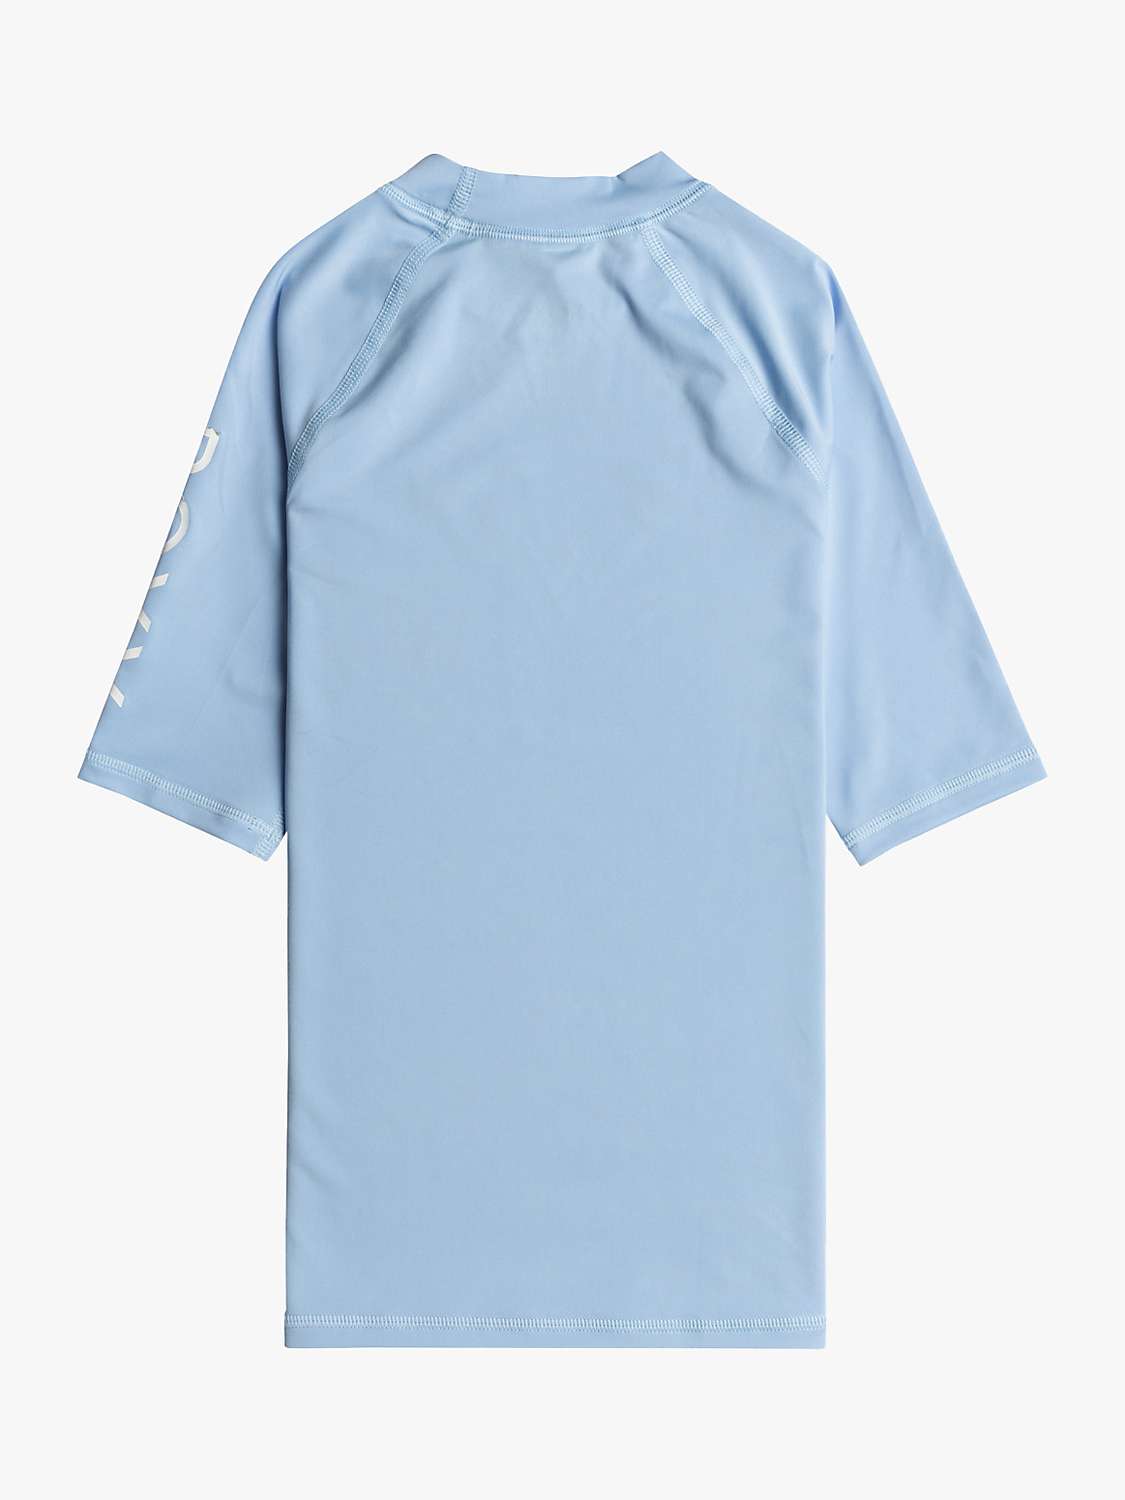 Buy Roxy Kids' UPF 50 Short Sleeve Rash Vest Online at johnlewis.com